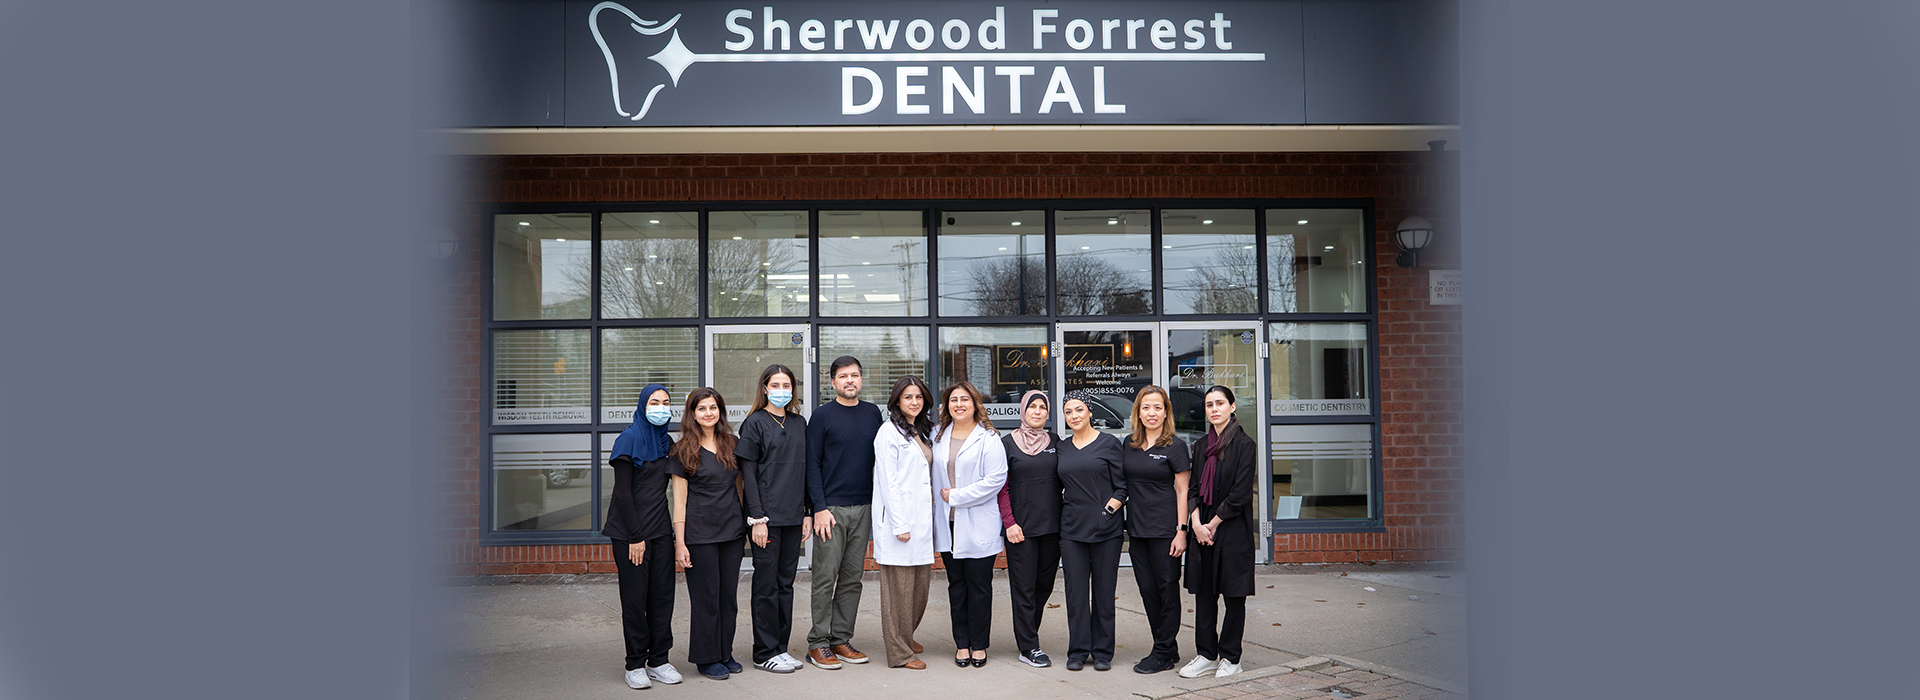 Welcome to Sherwood Forrest Dental